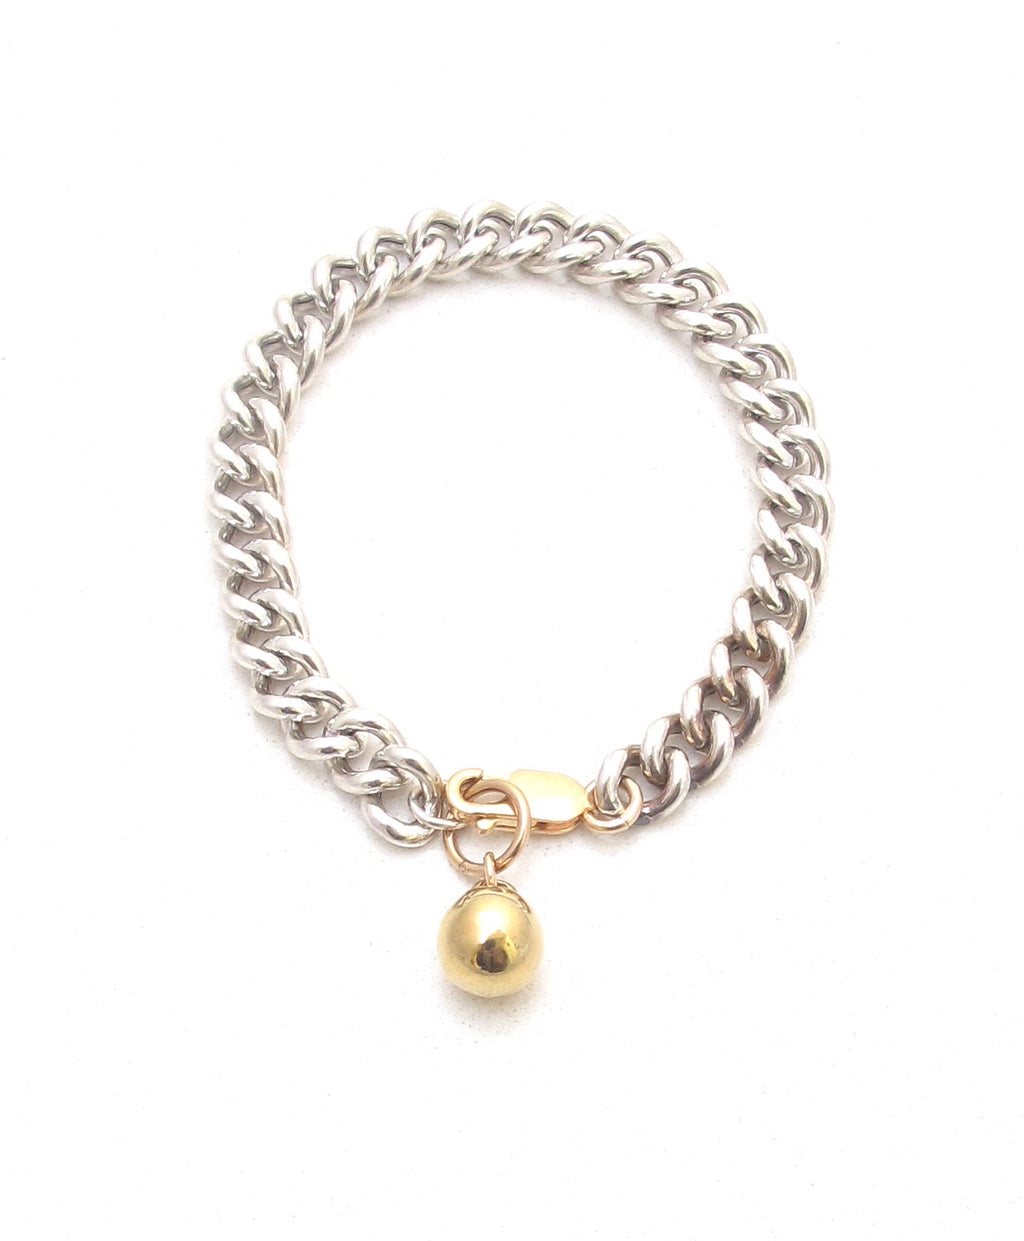 Ball & Chain silver bracelet 